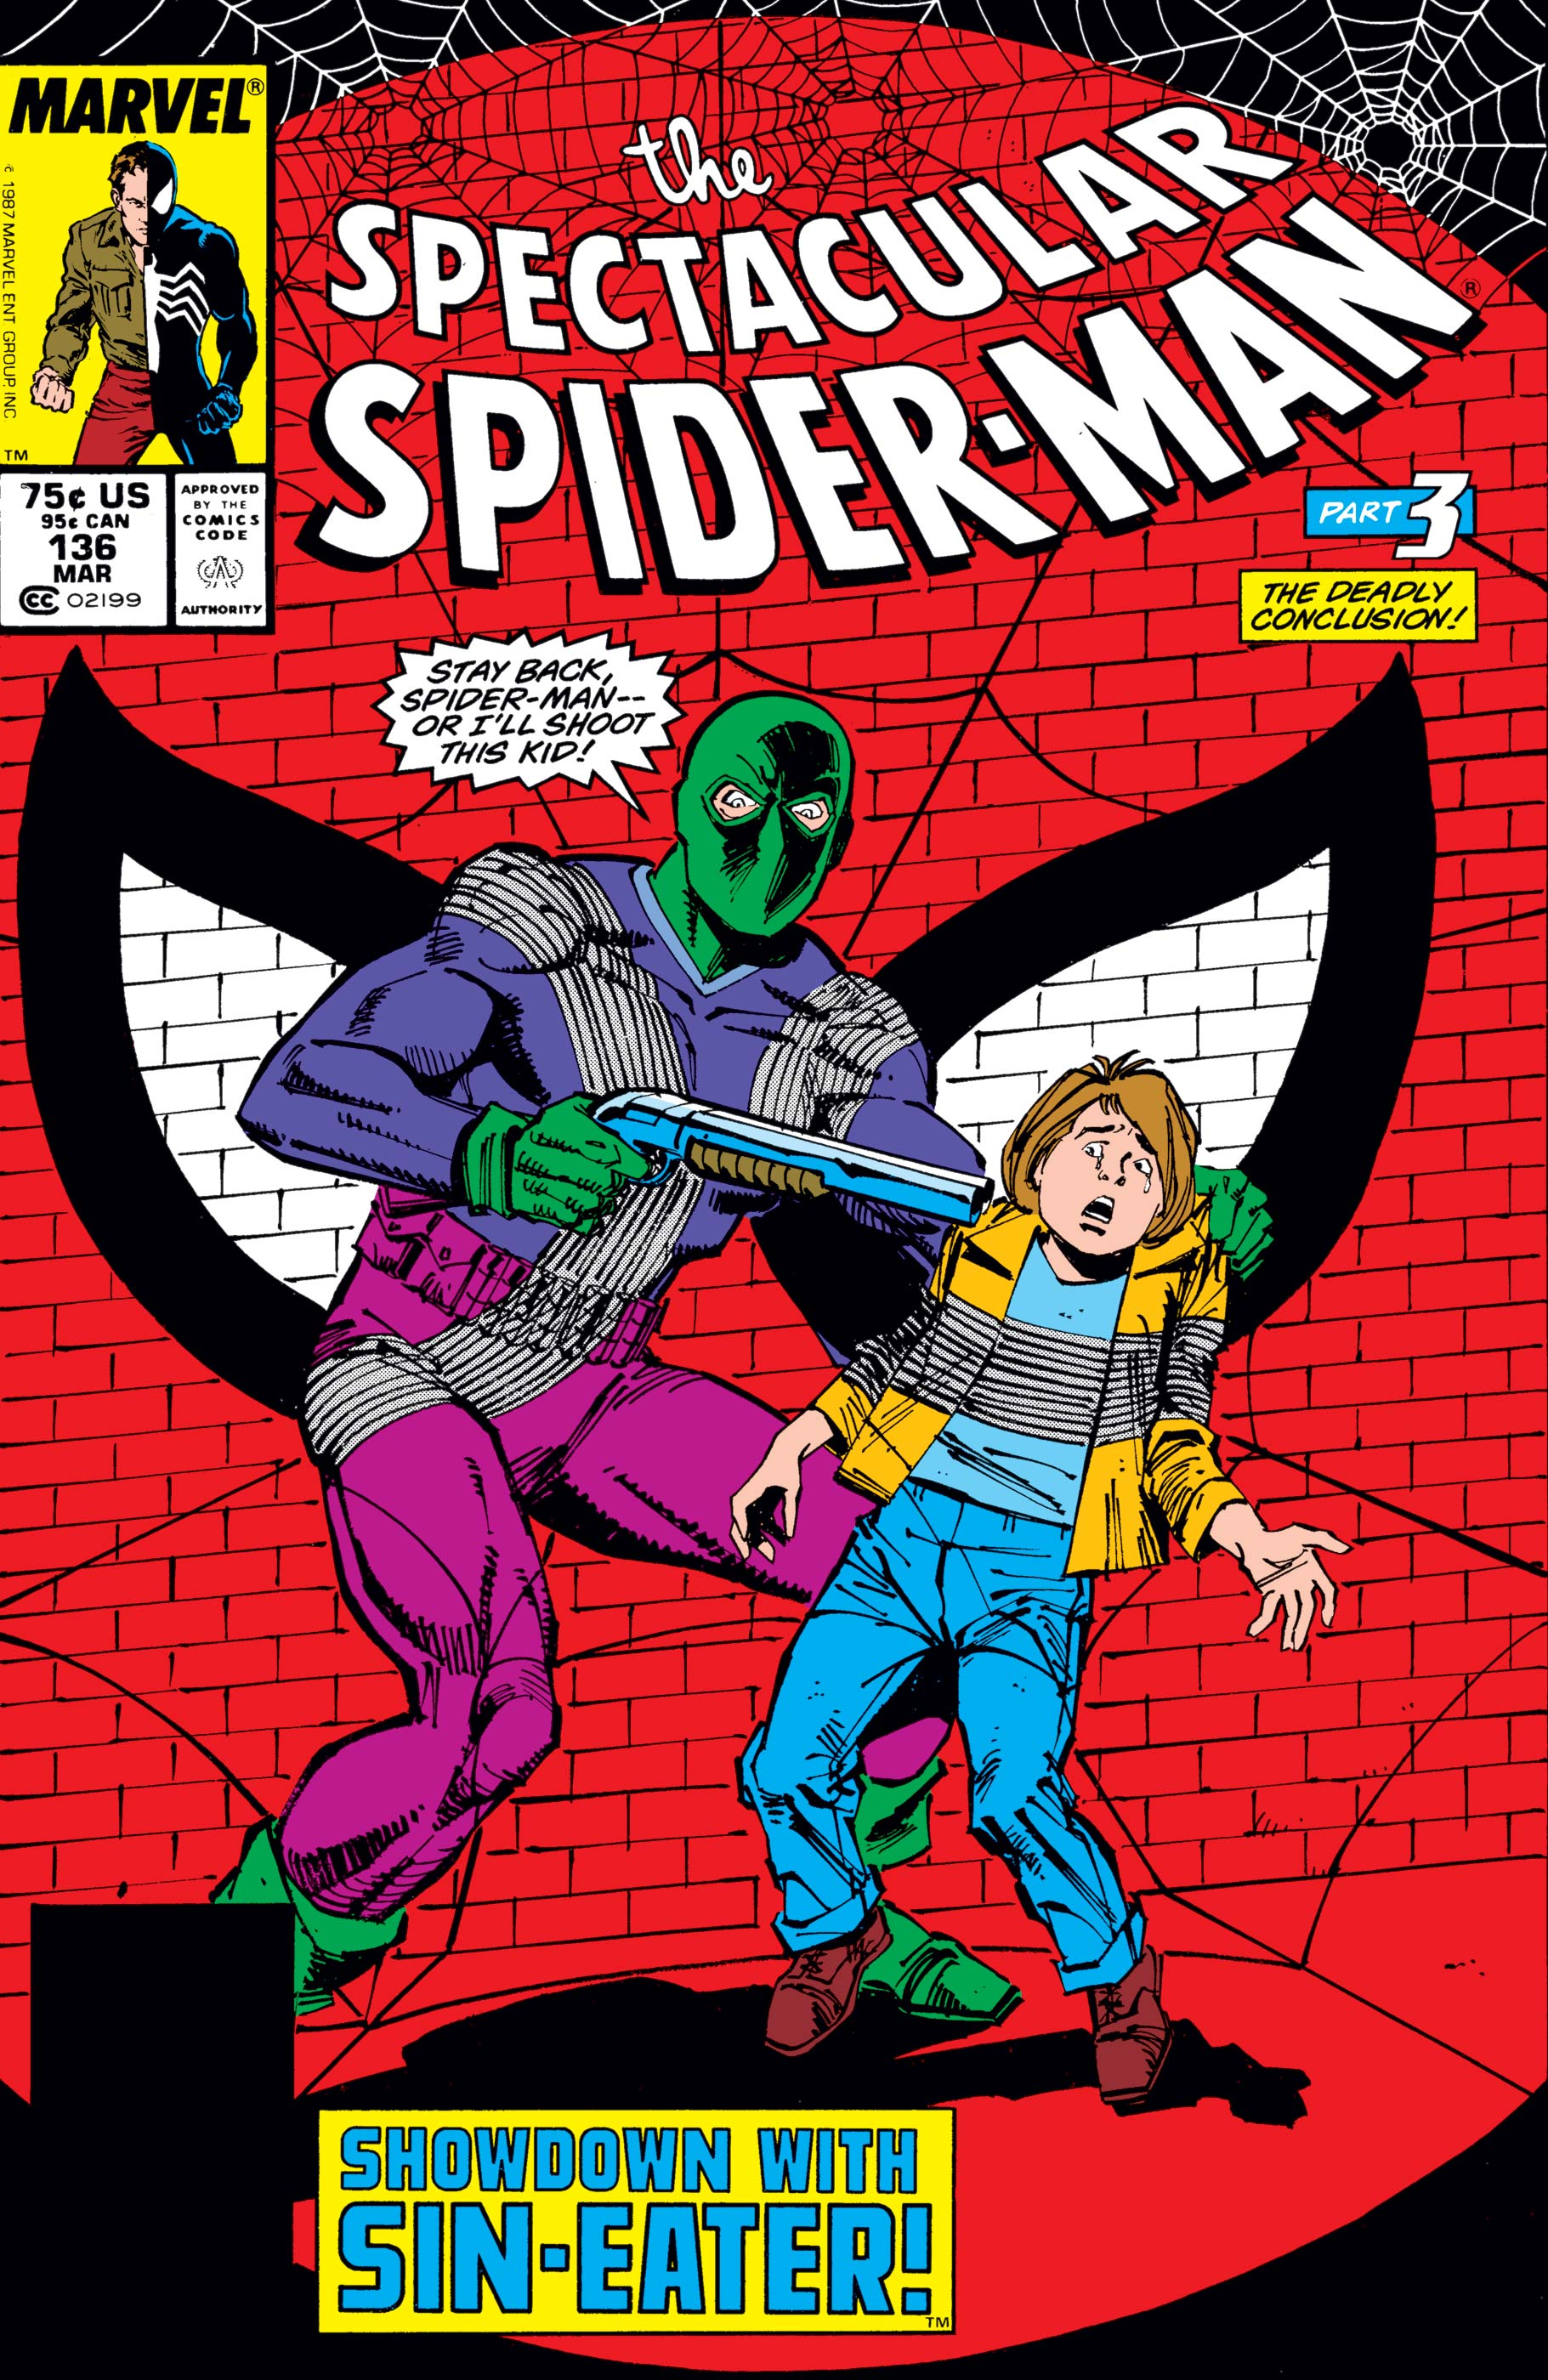 Peter Parker, the Spectacular Spider-Man (1976) #136